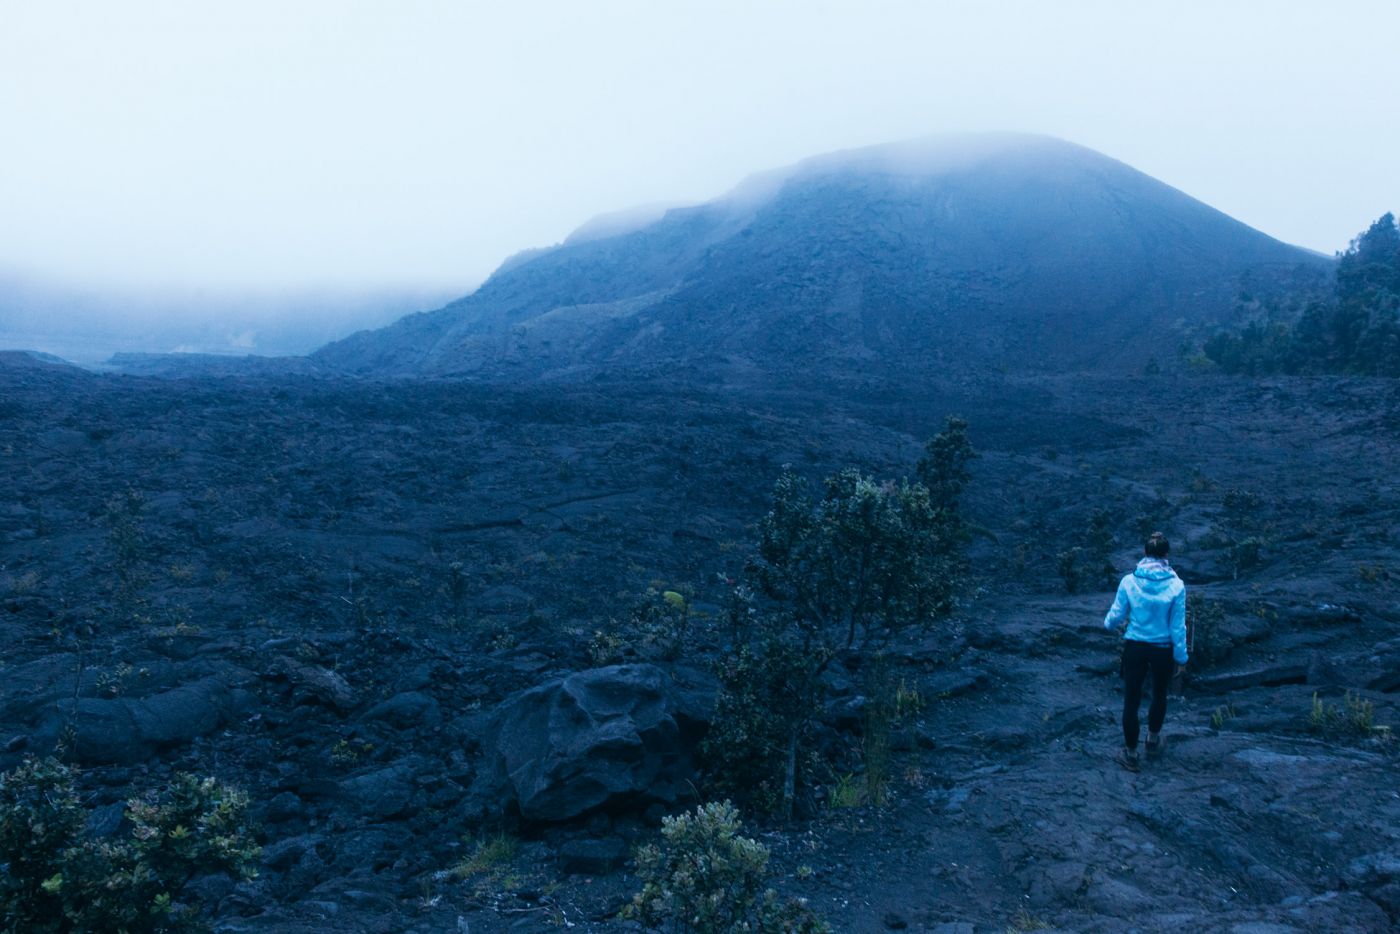 Woman entering the Kilauea Iki Crater, Hawaii